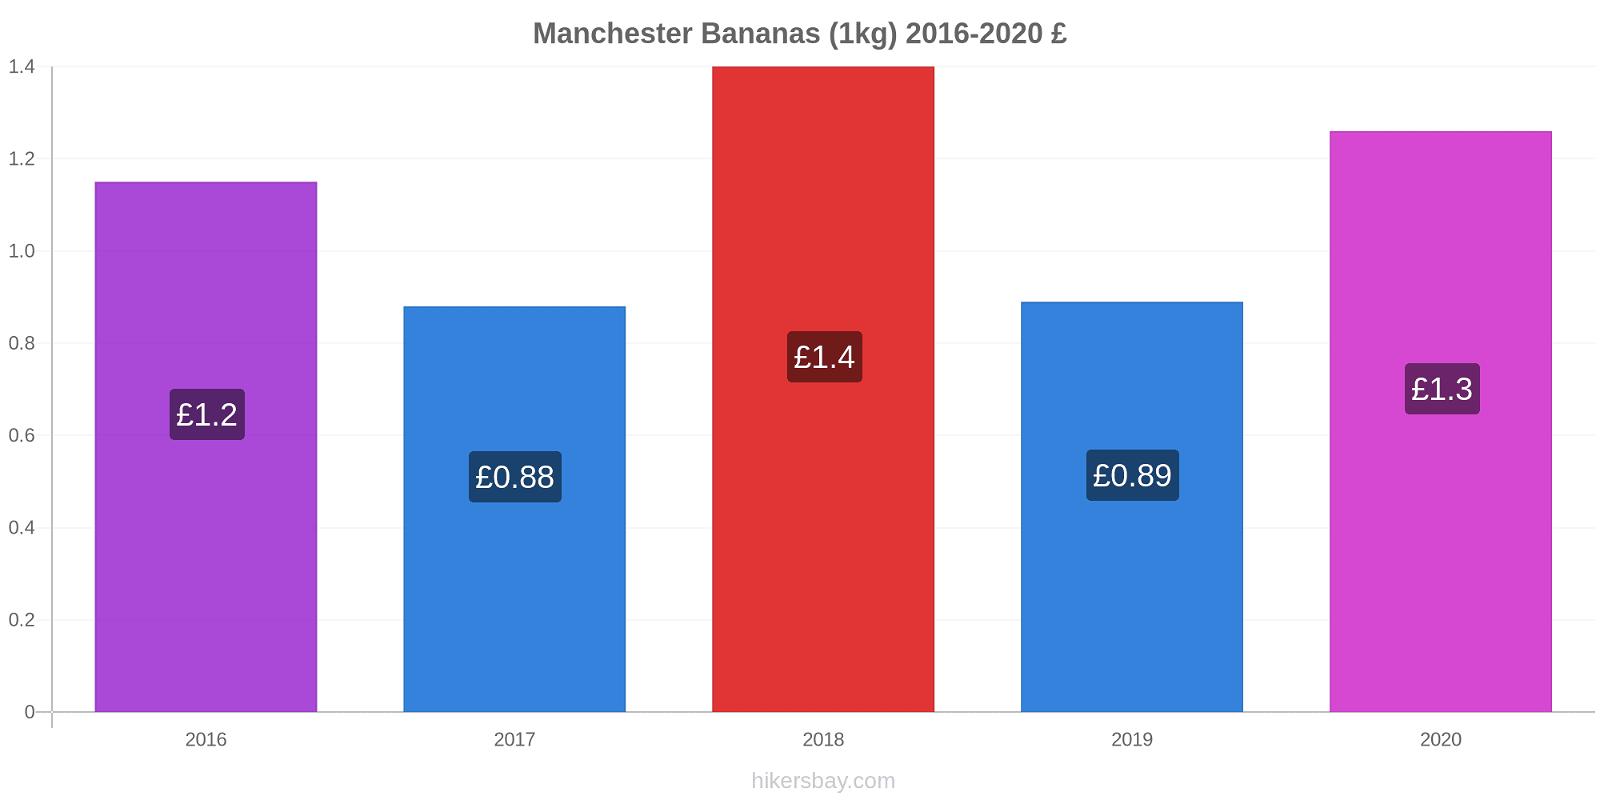 Manchester price changes Bananas (1kg) hikersbay.com